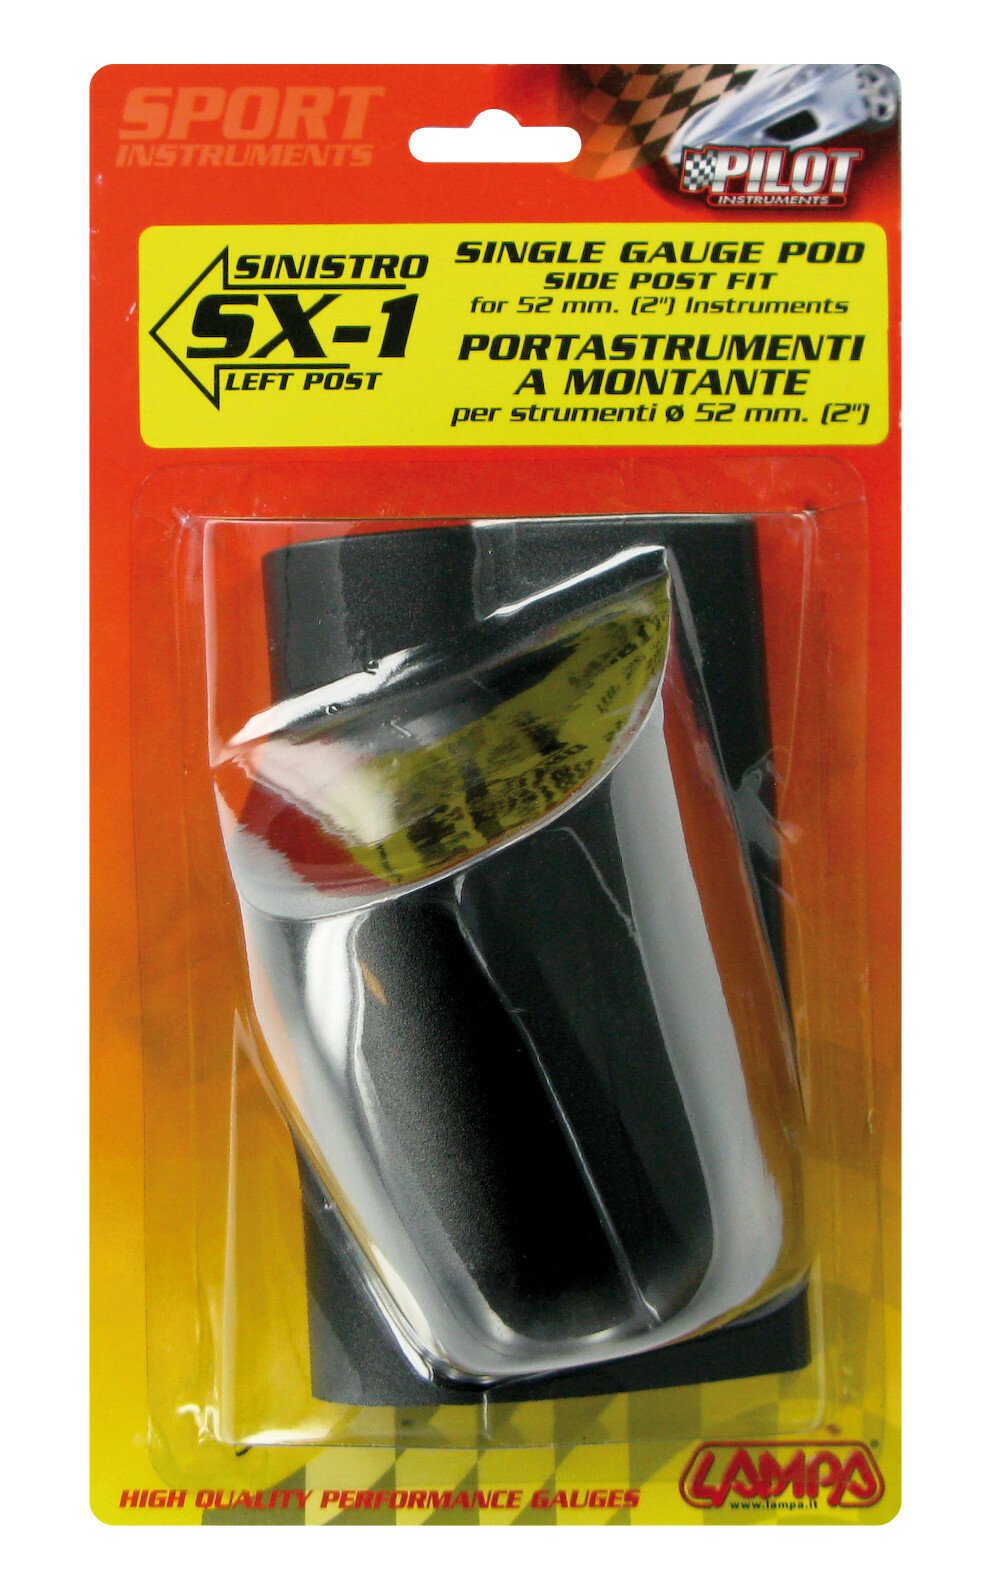 1 hole side post gauge pod SX1 (52 mm) - Black - Left thumb